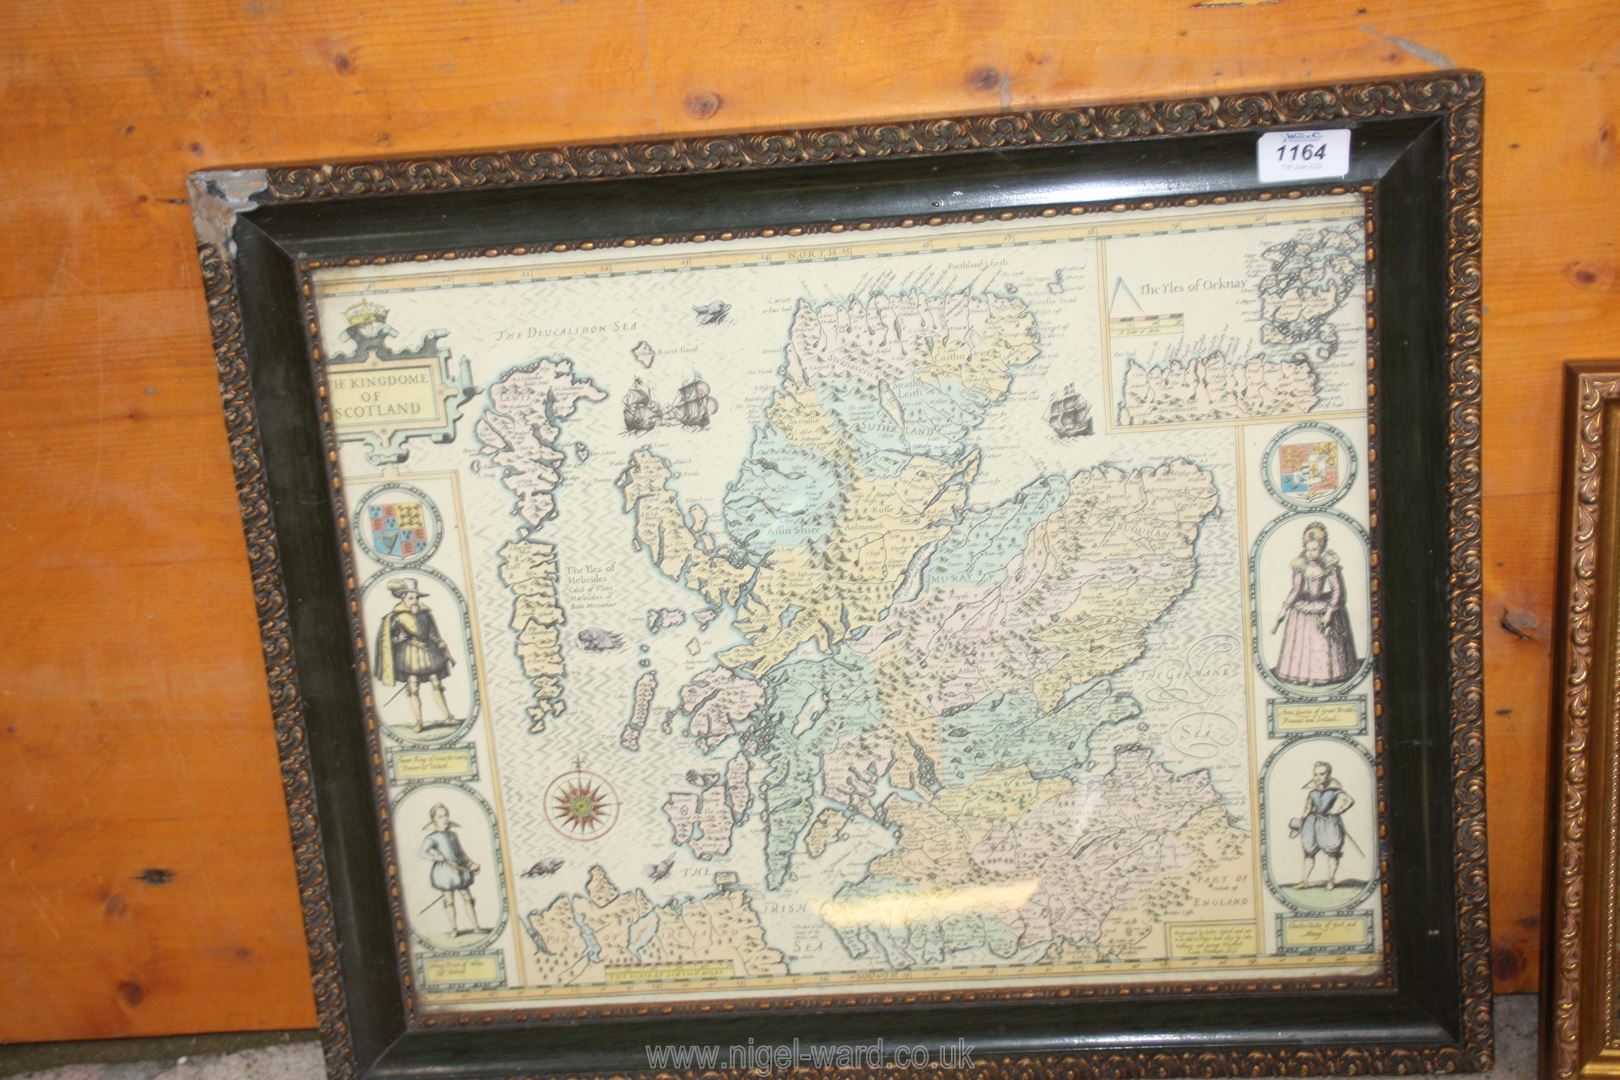 A copy of a John Speed map 'Kingdom of Scotland', frame damaged, - Image 2 of 2